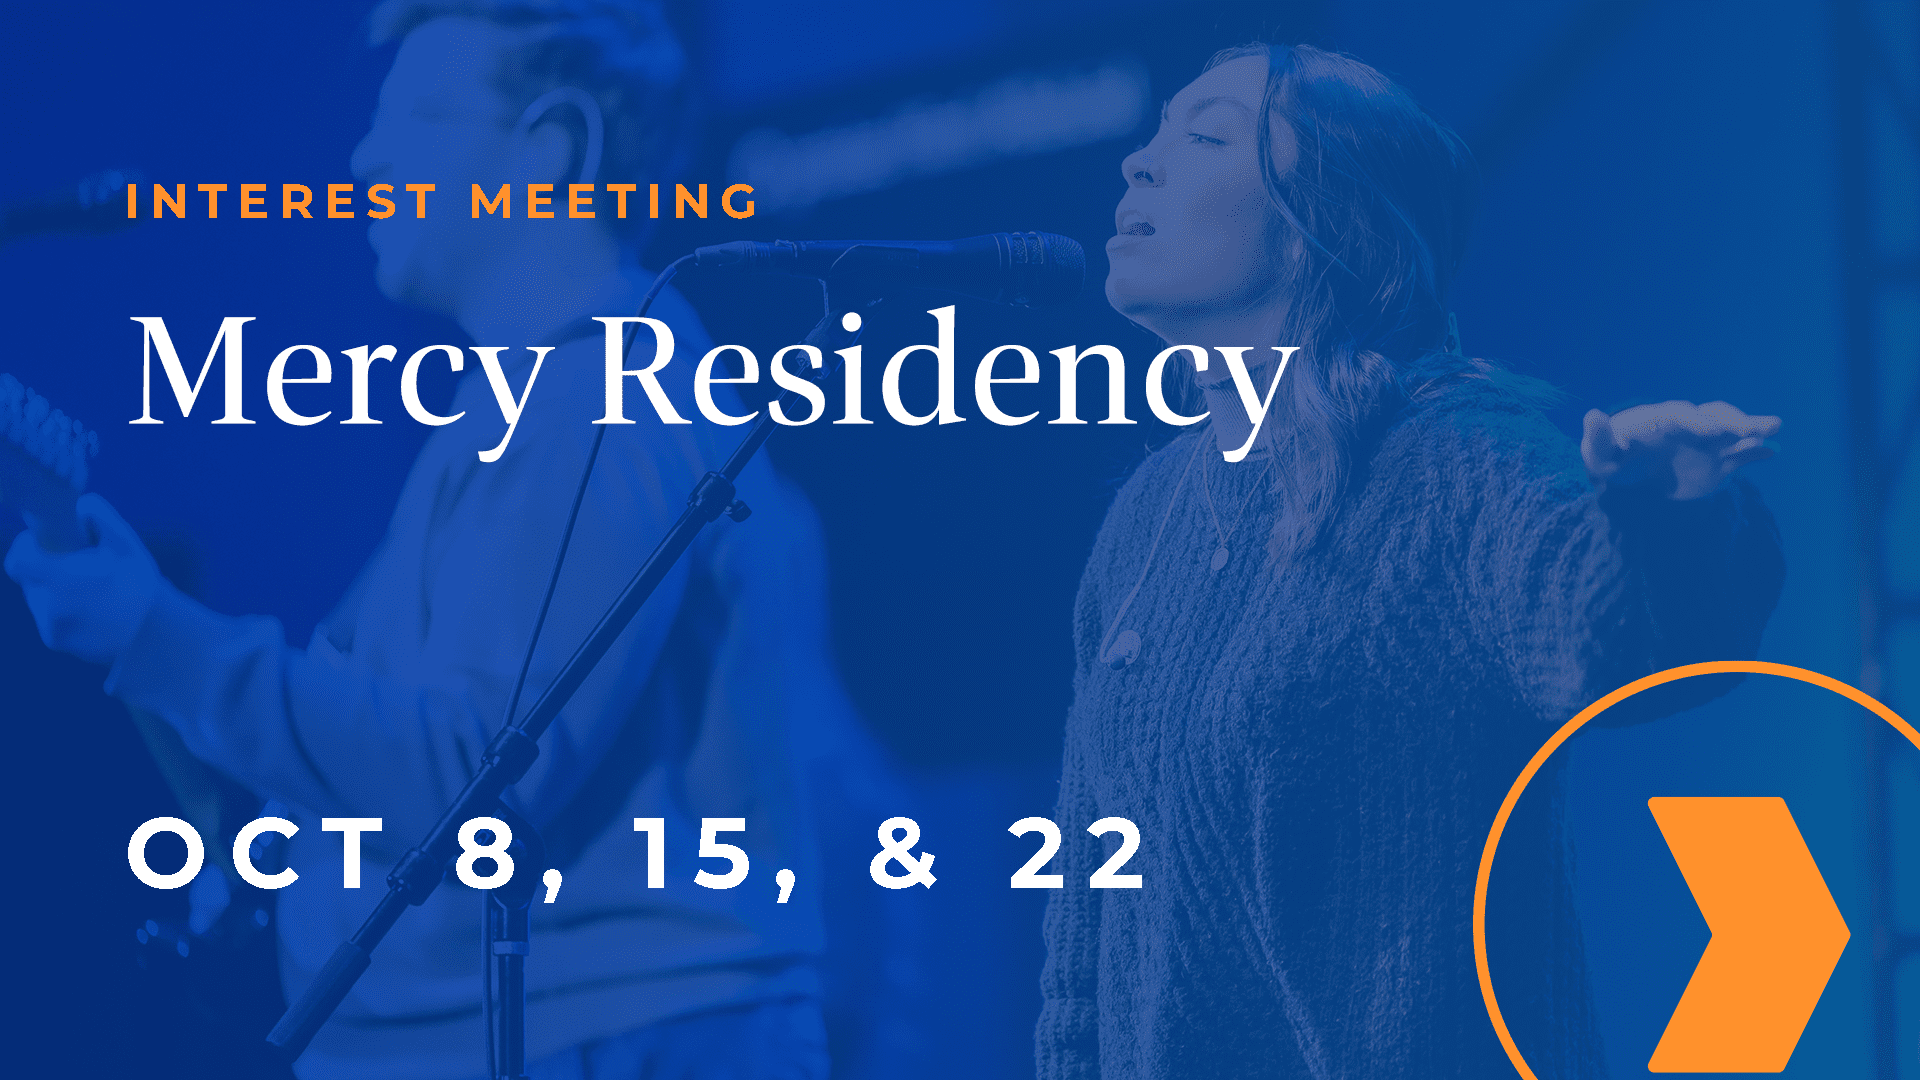 Residency Interest Meeting - Mercy Residency Interest Meeting